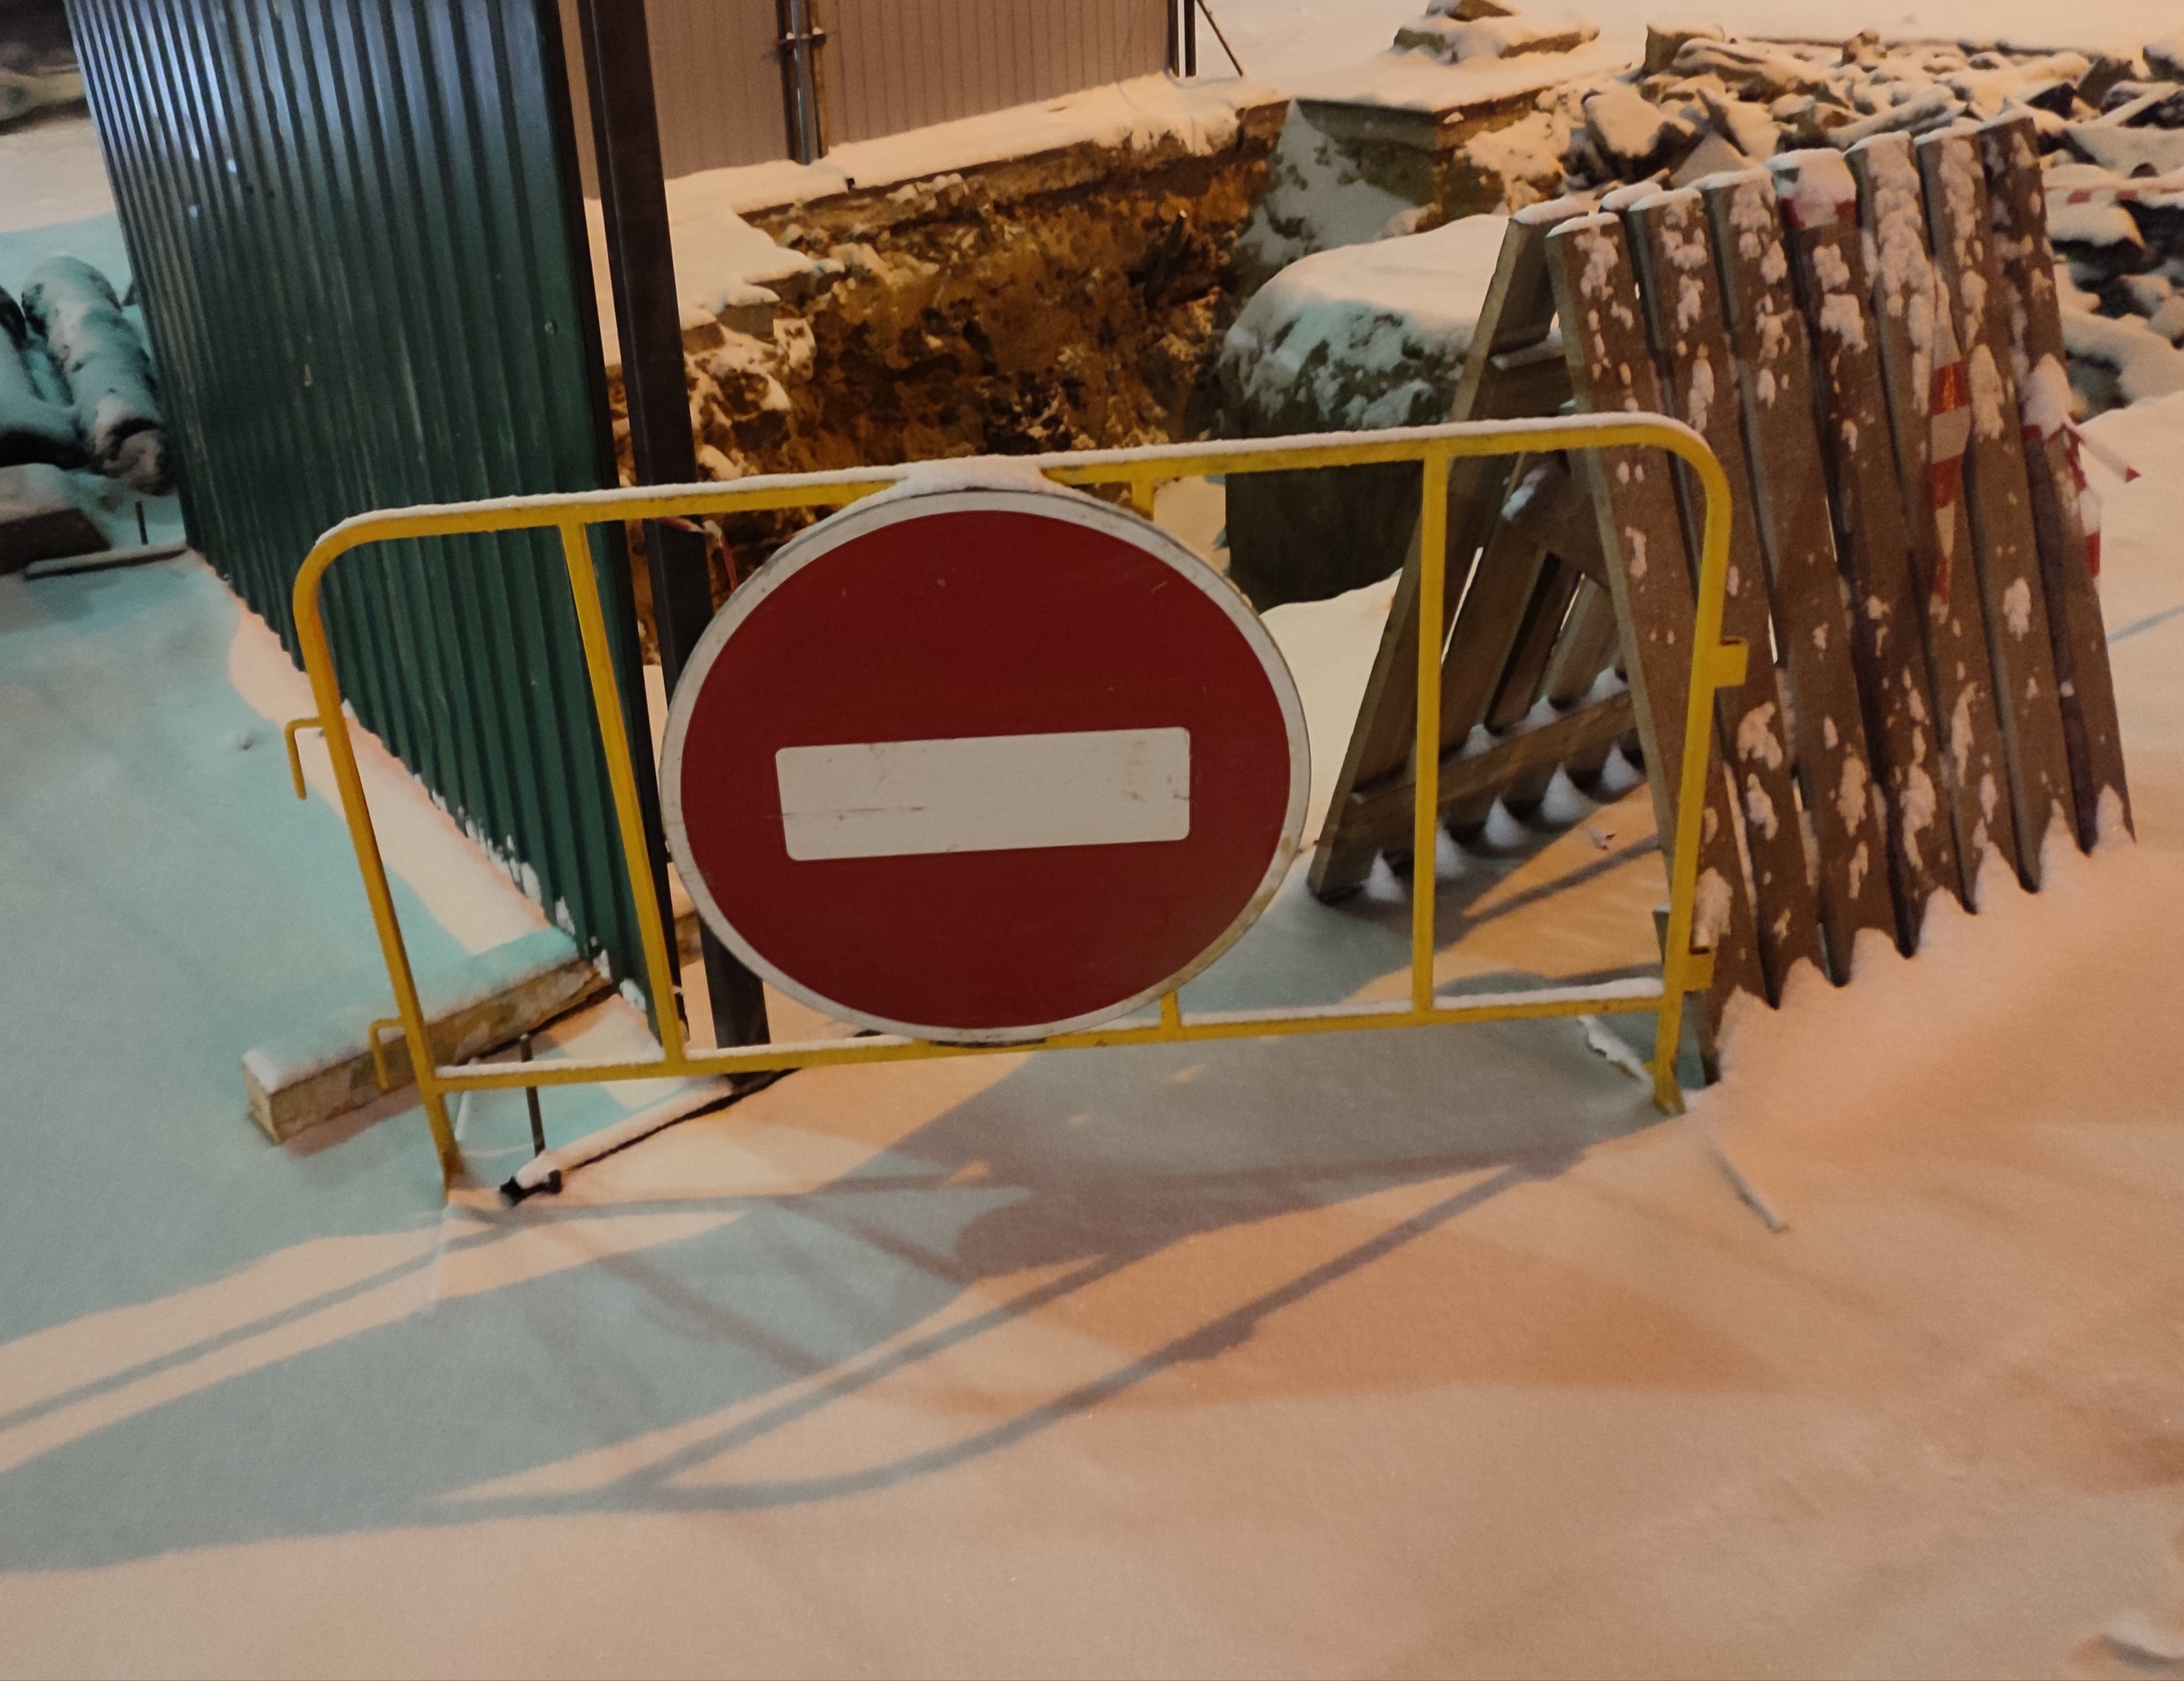 В Йошкар-Оле перекроют участок дороги из-за аварии на водопроводе